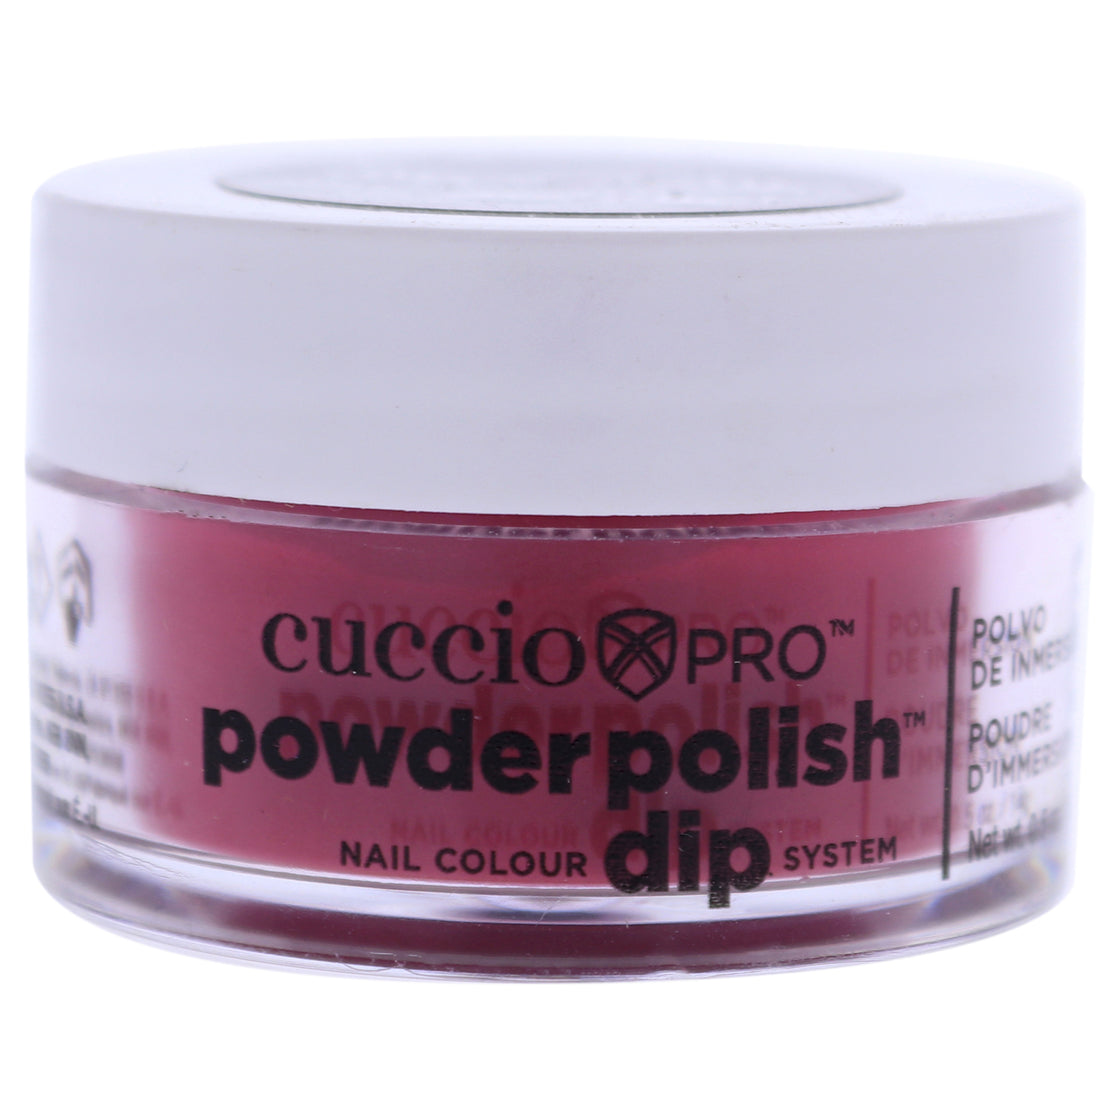 Pro Powder Polish Nail Colour Dip System - Strawberry Red by Cuccio Colour for Women - 0.5 oz Nail Powder